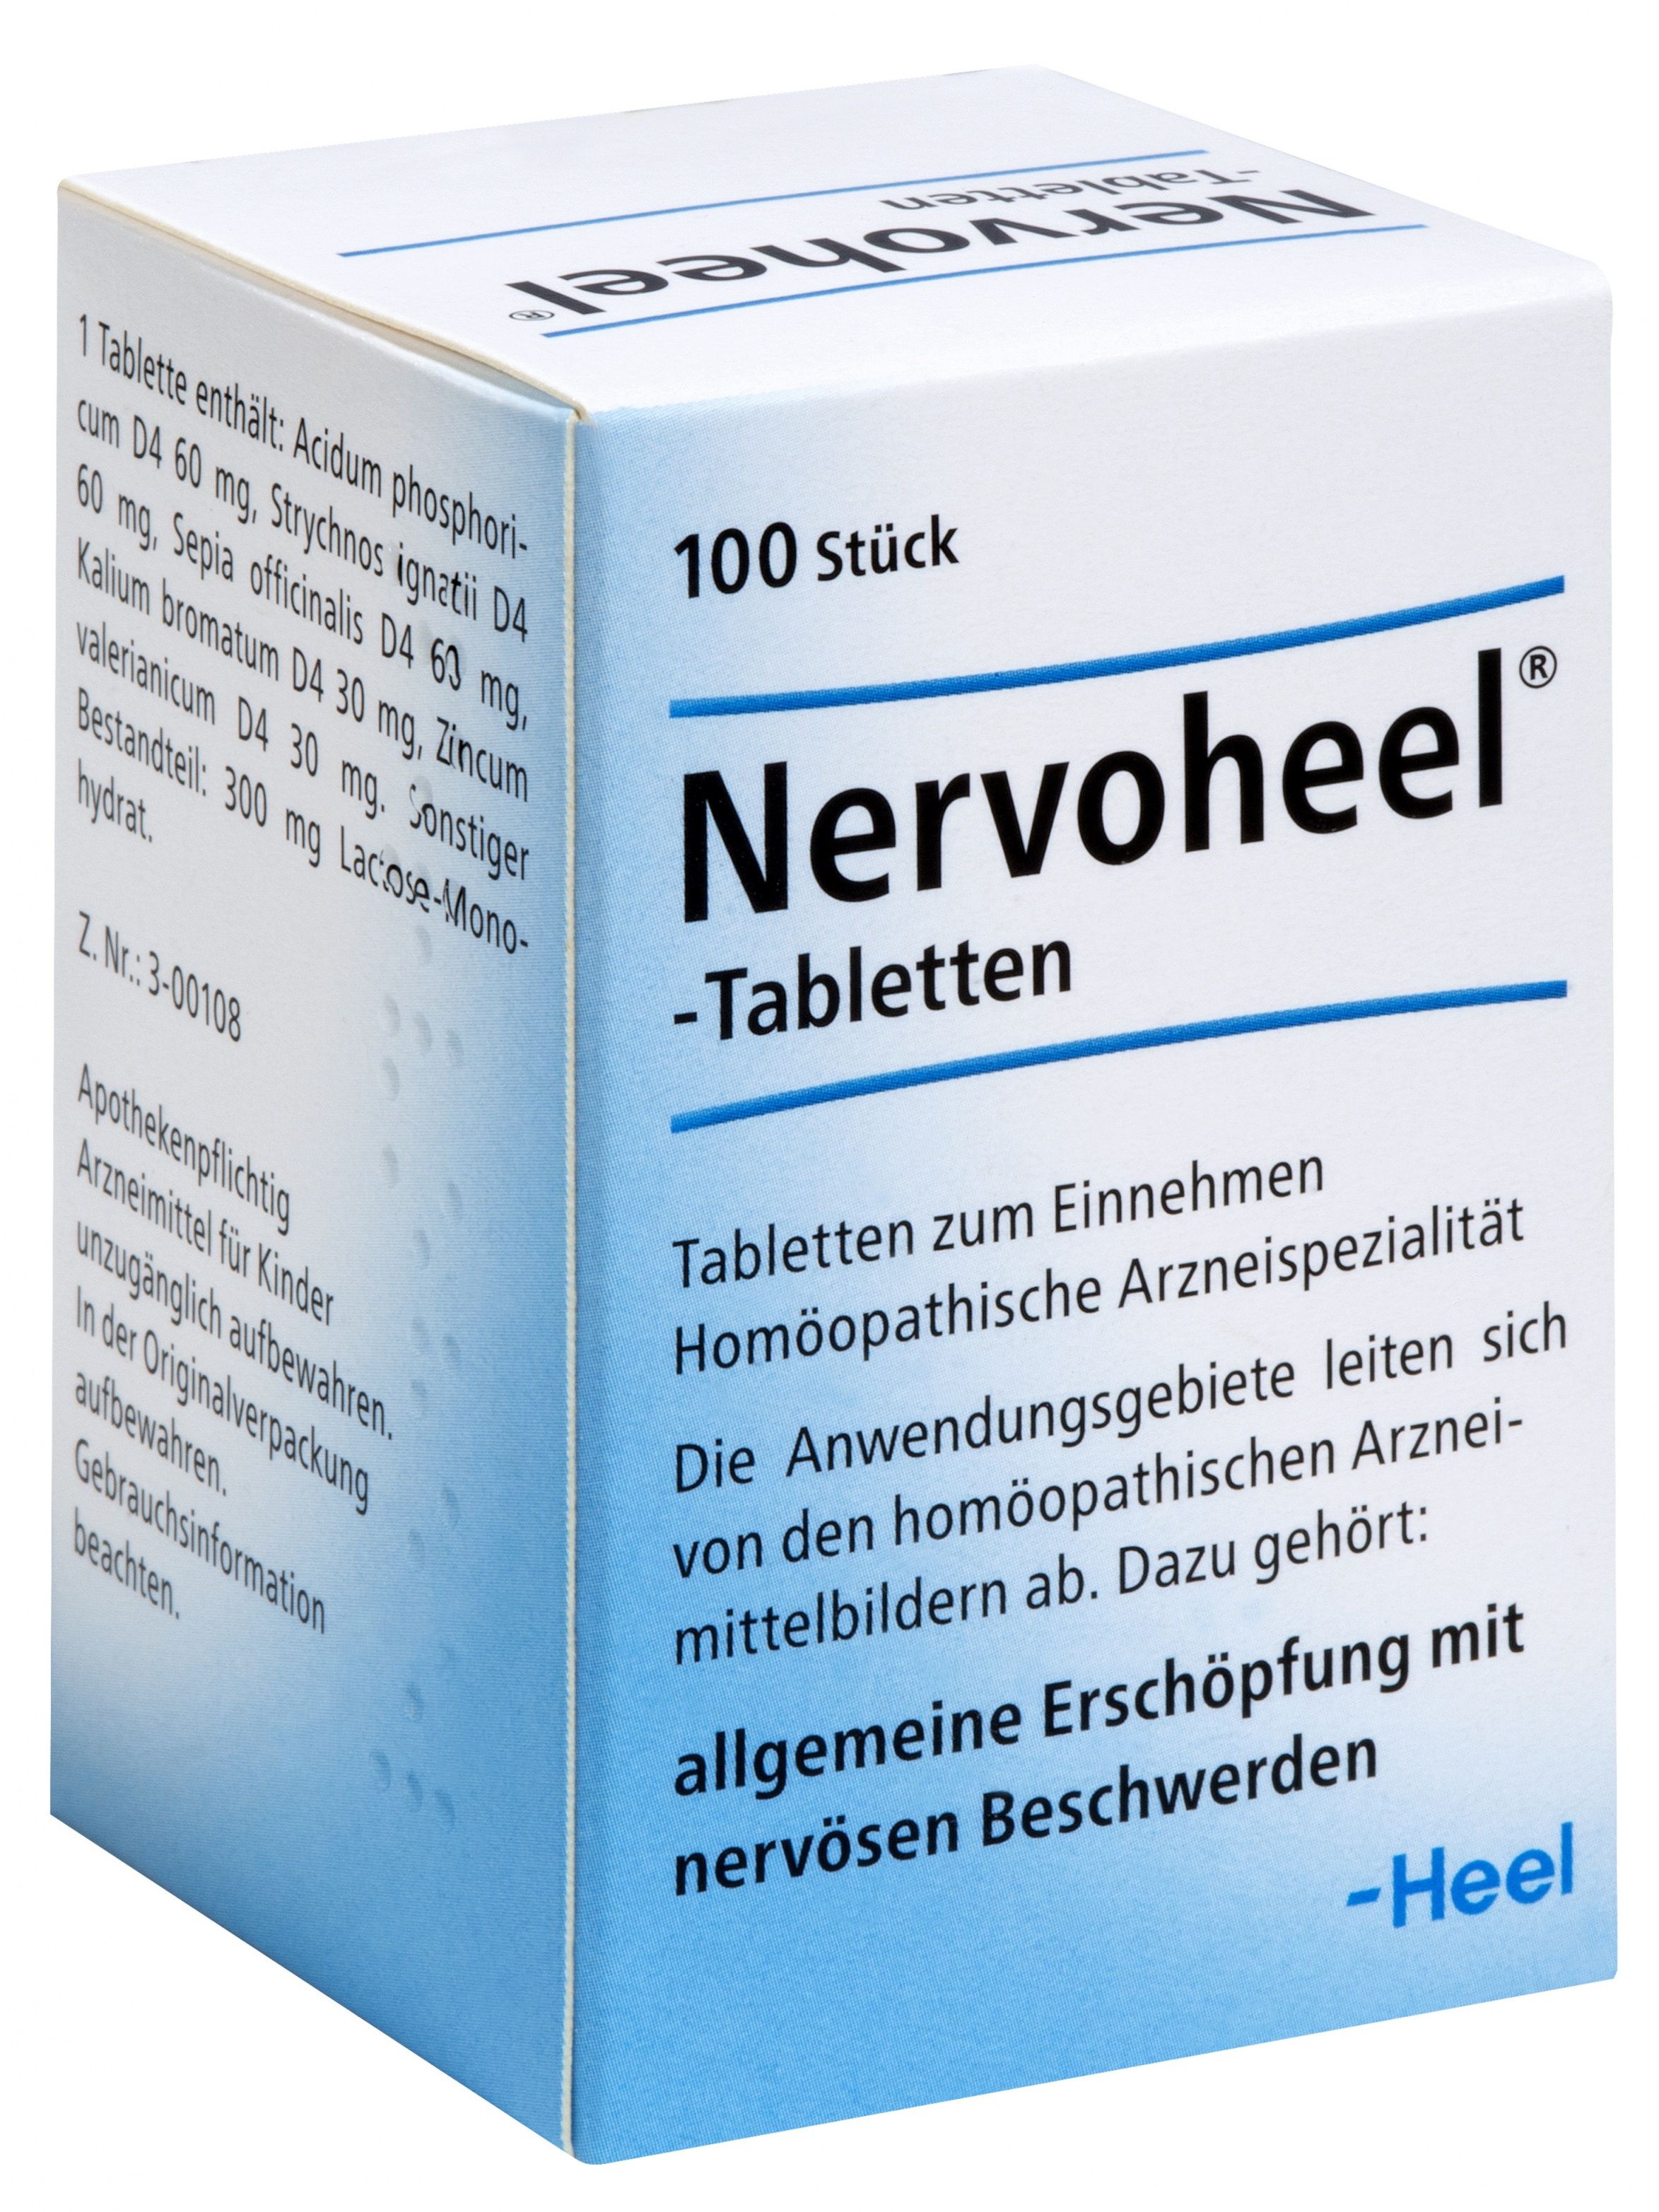 Abbildung Nervoheel-Tabletten